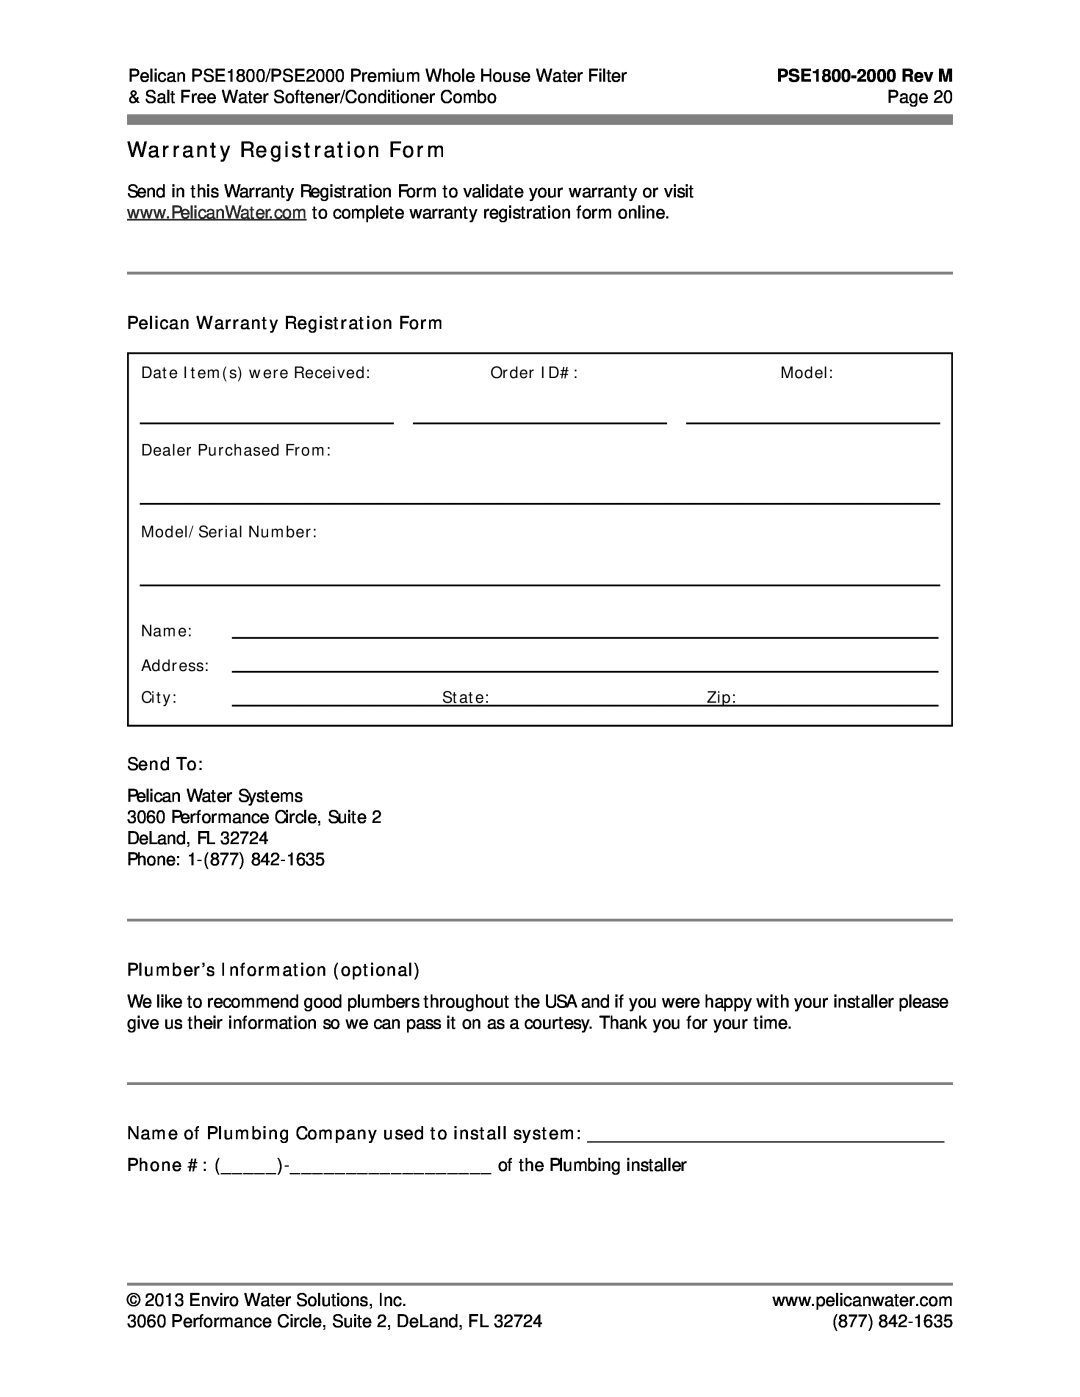 Pelican PSE2000 PSE1800-2000Rev M, Pelican Warranty Registration Form, Send To, Plumber’s Information optional 